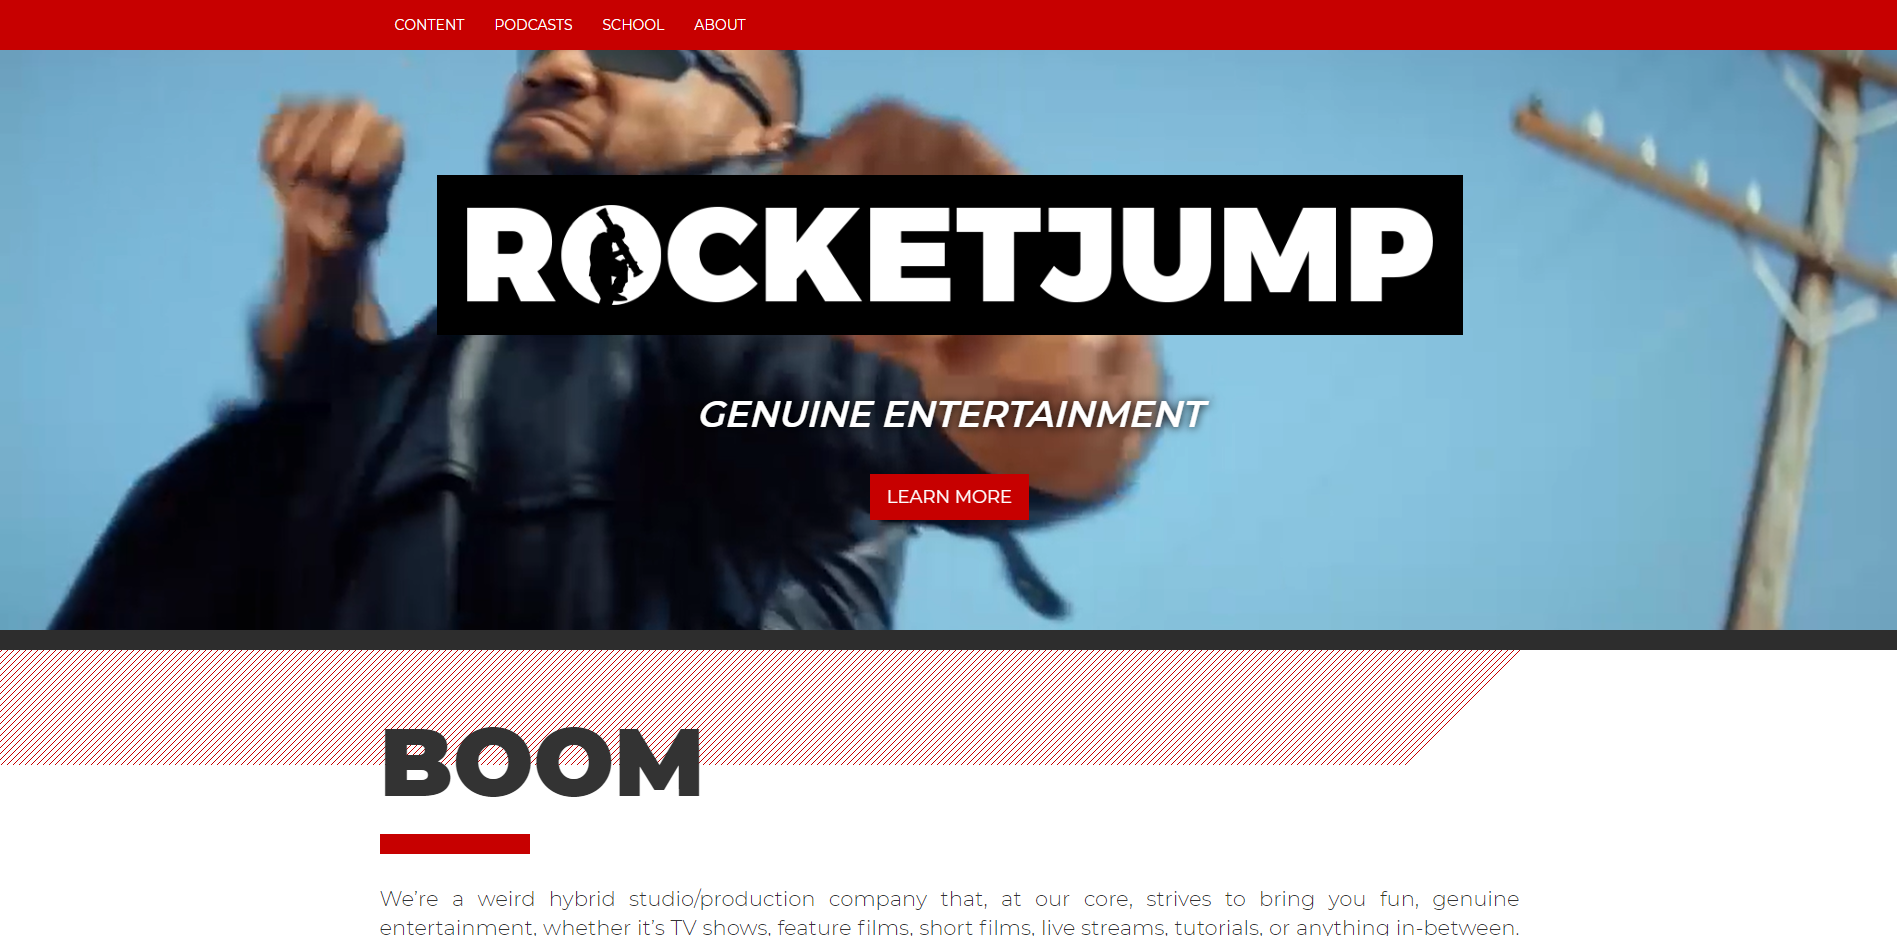 Rocket jump